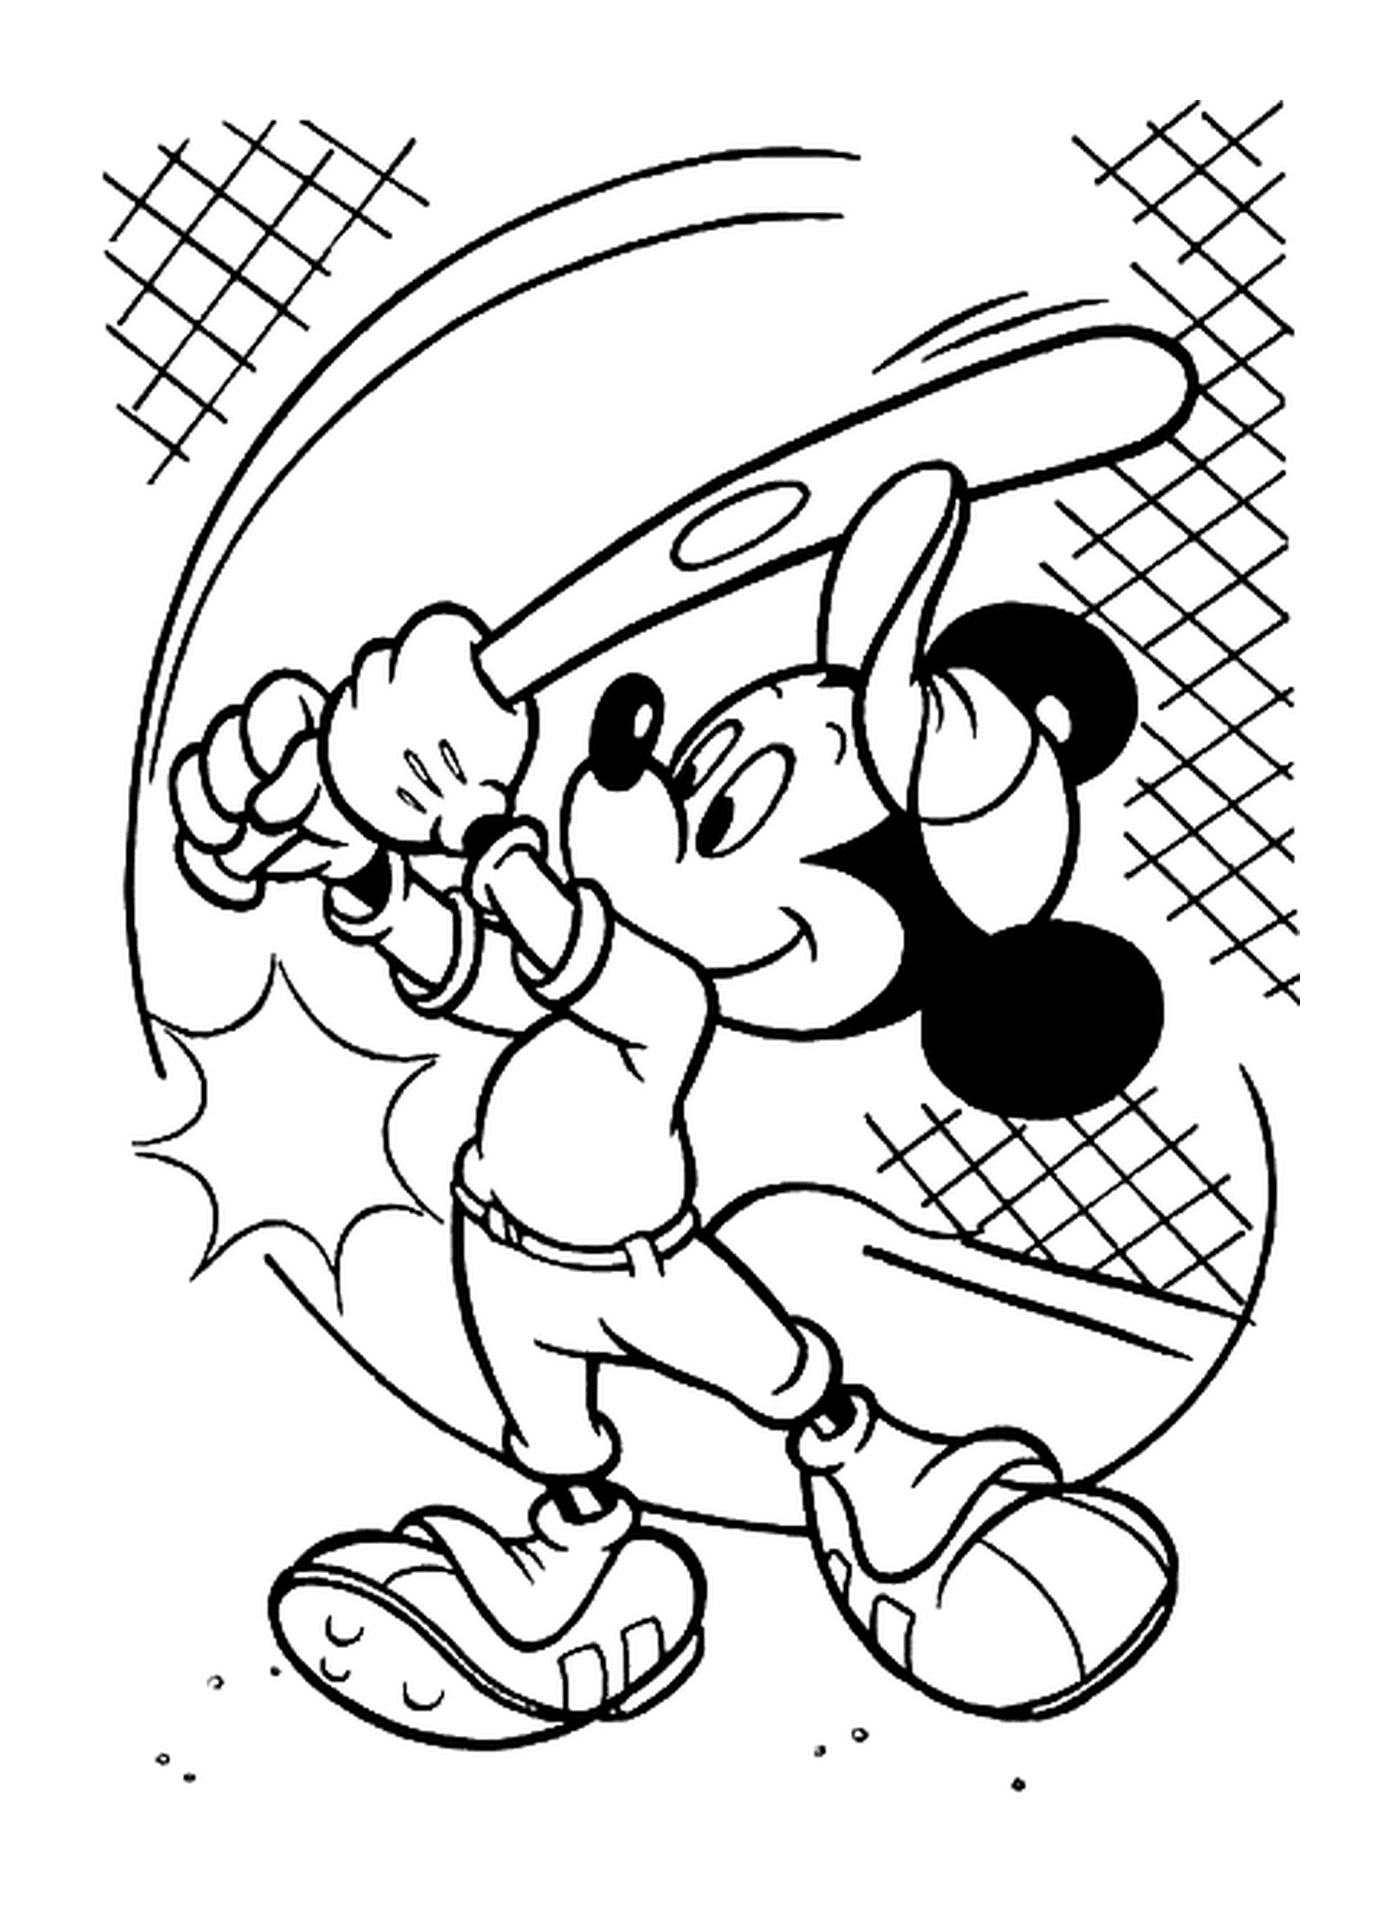   Dessin de Mickey qui joue au baseball : tenant une batte de baseball 